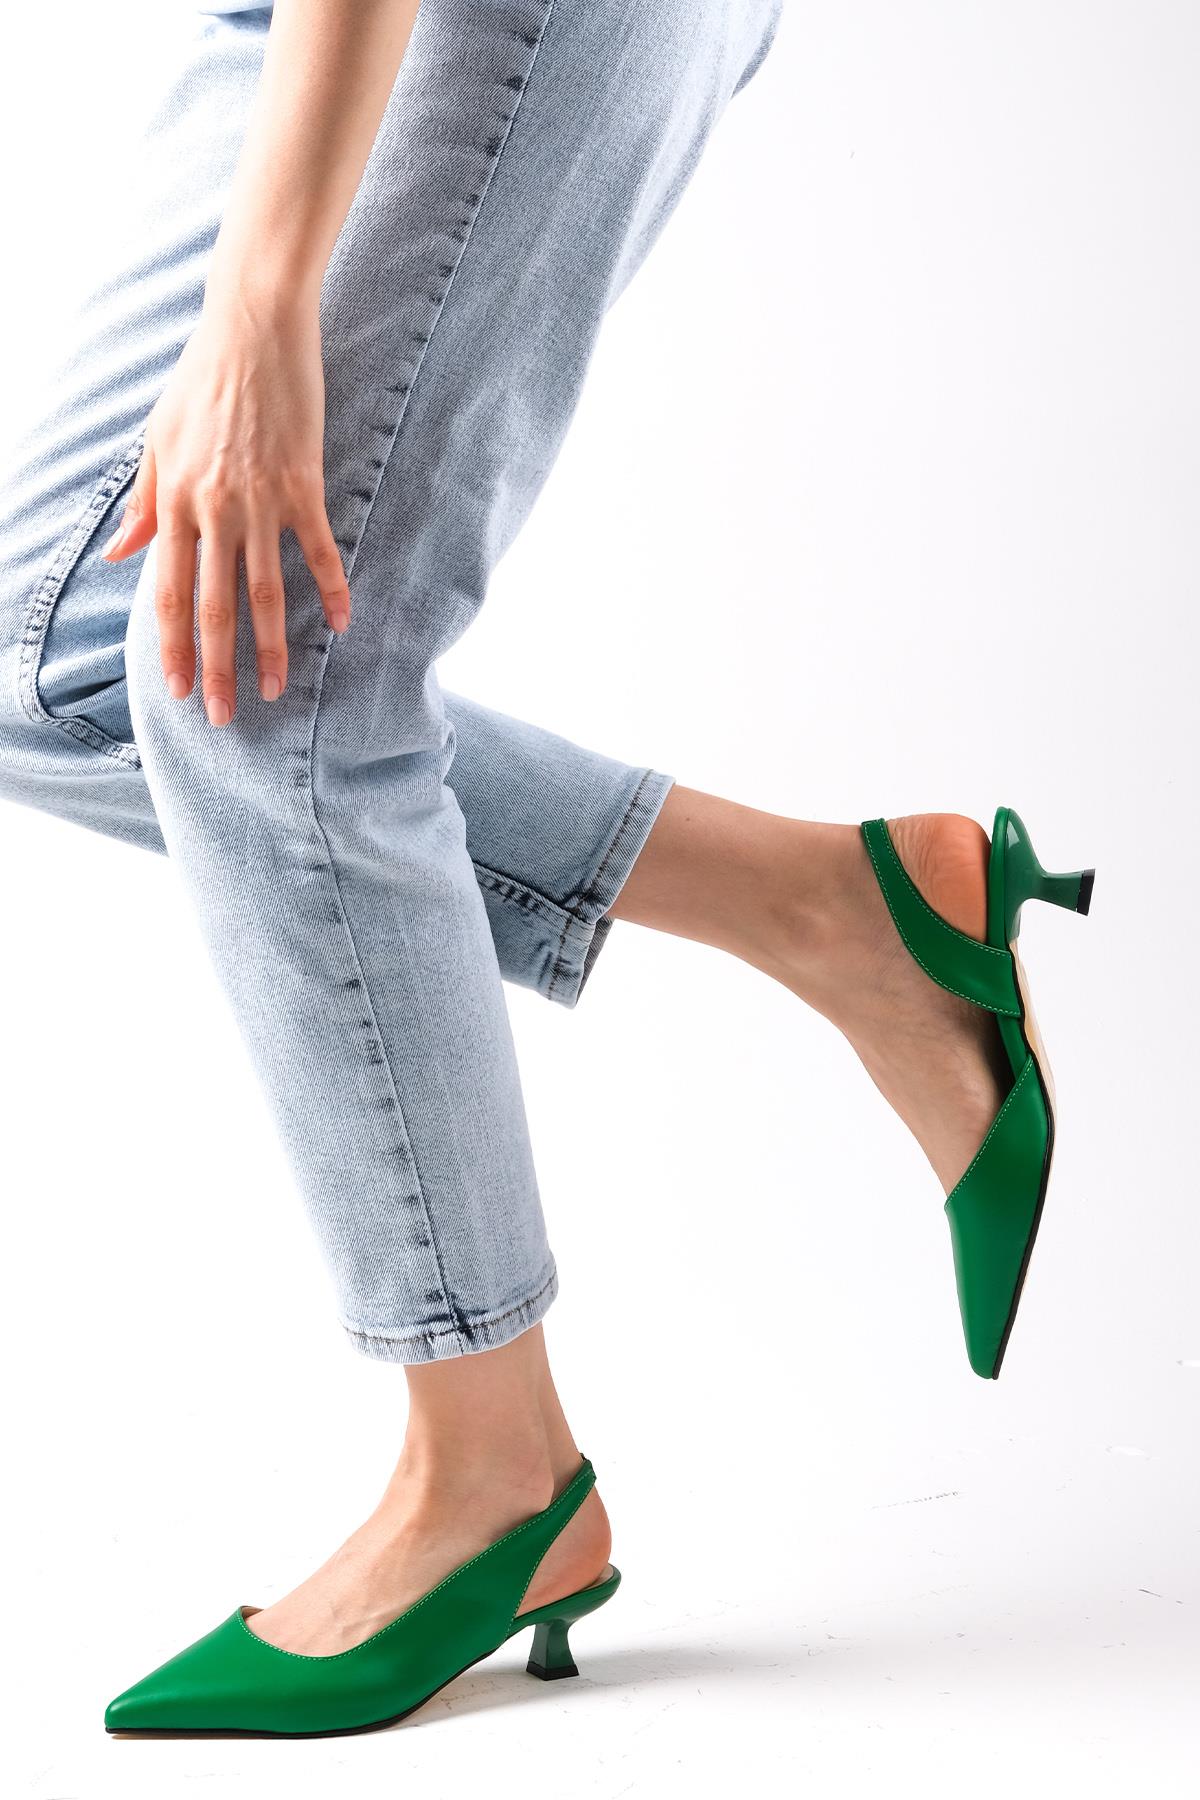 Mio Gusto Yeşil Renk Kısa Topuklu Ayakkabı